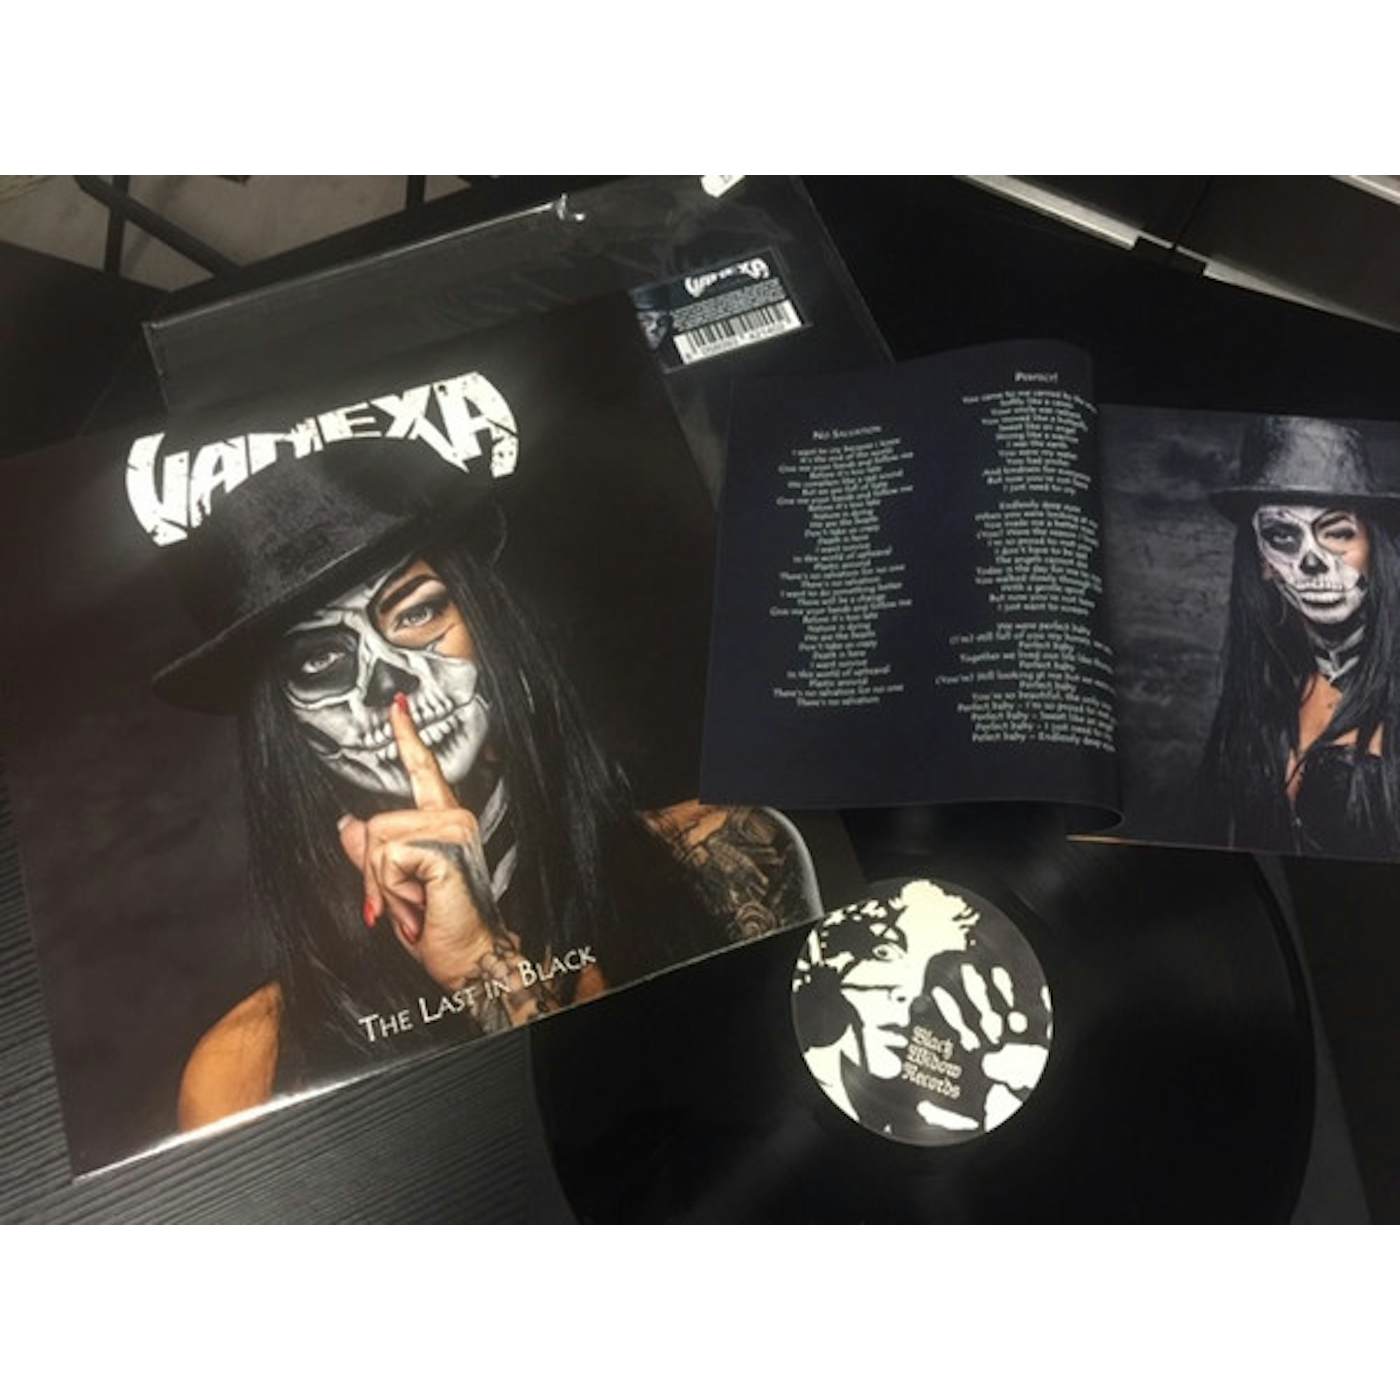 Vanexa LAST IN BLACK Vinyl Record